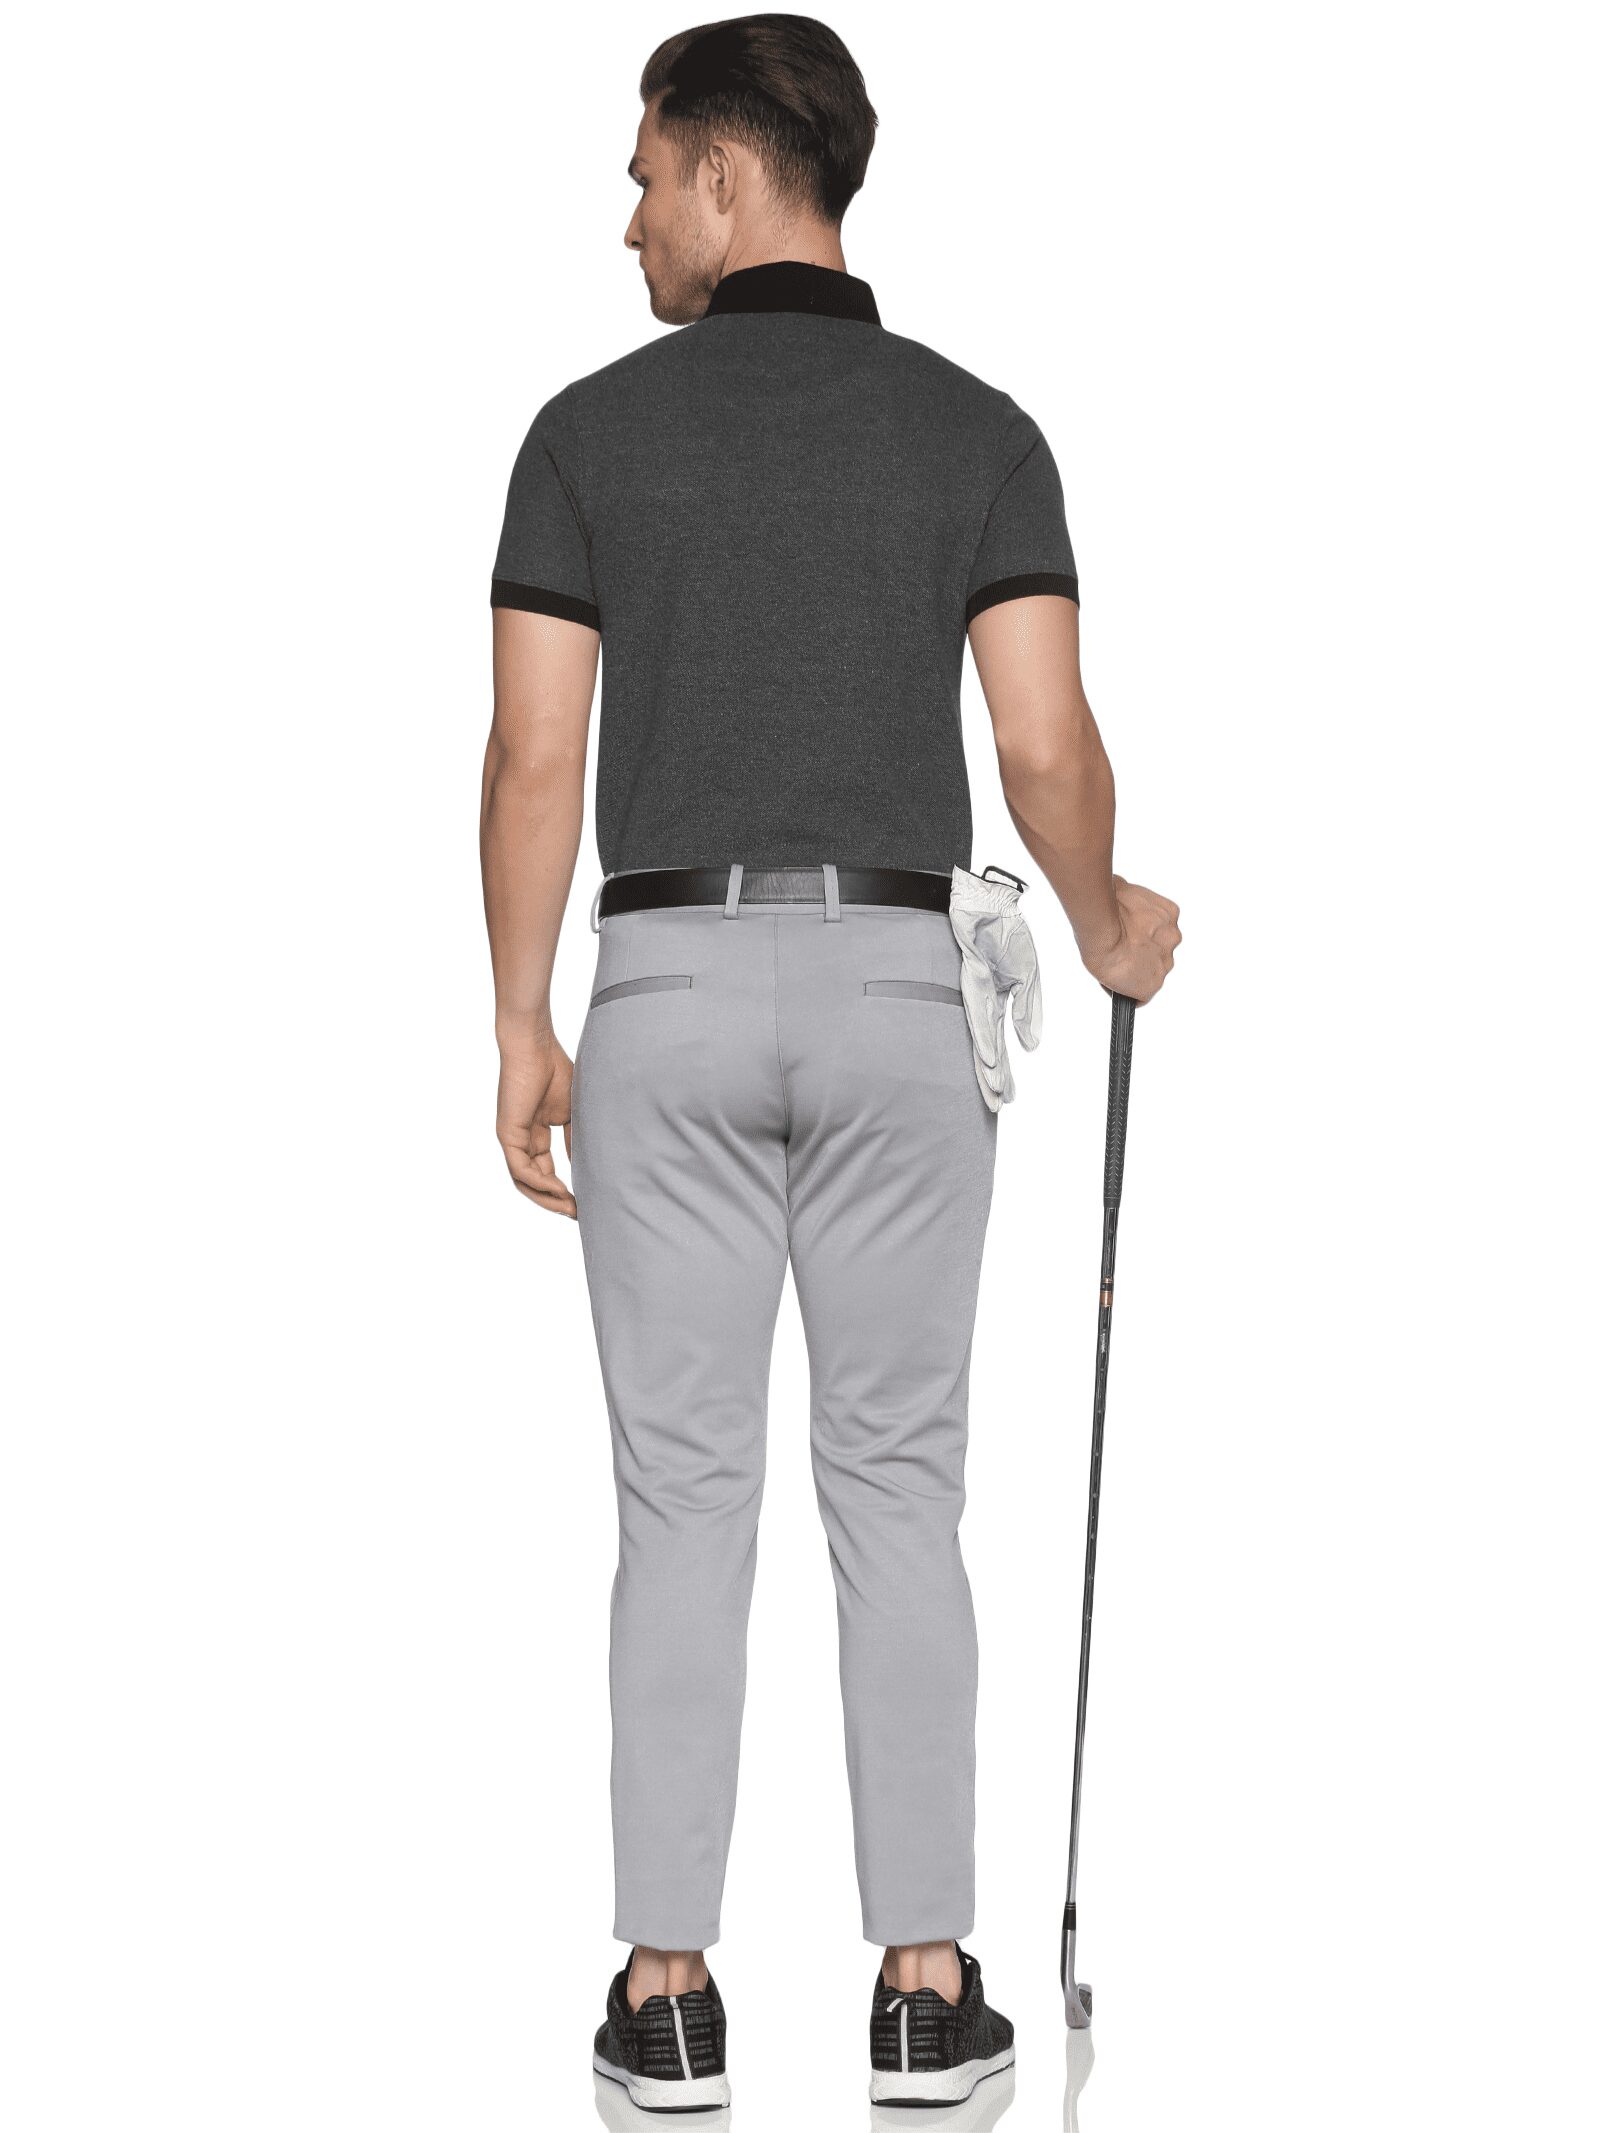 White Golf Pants  Tights Nikecom